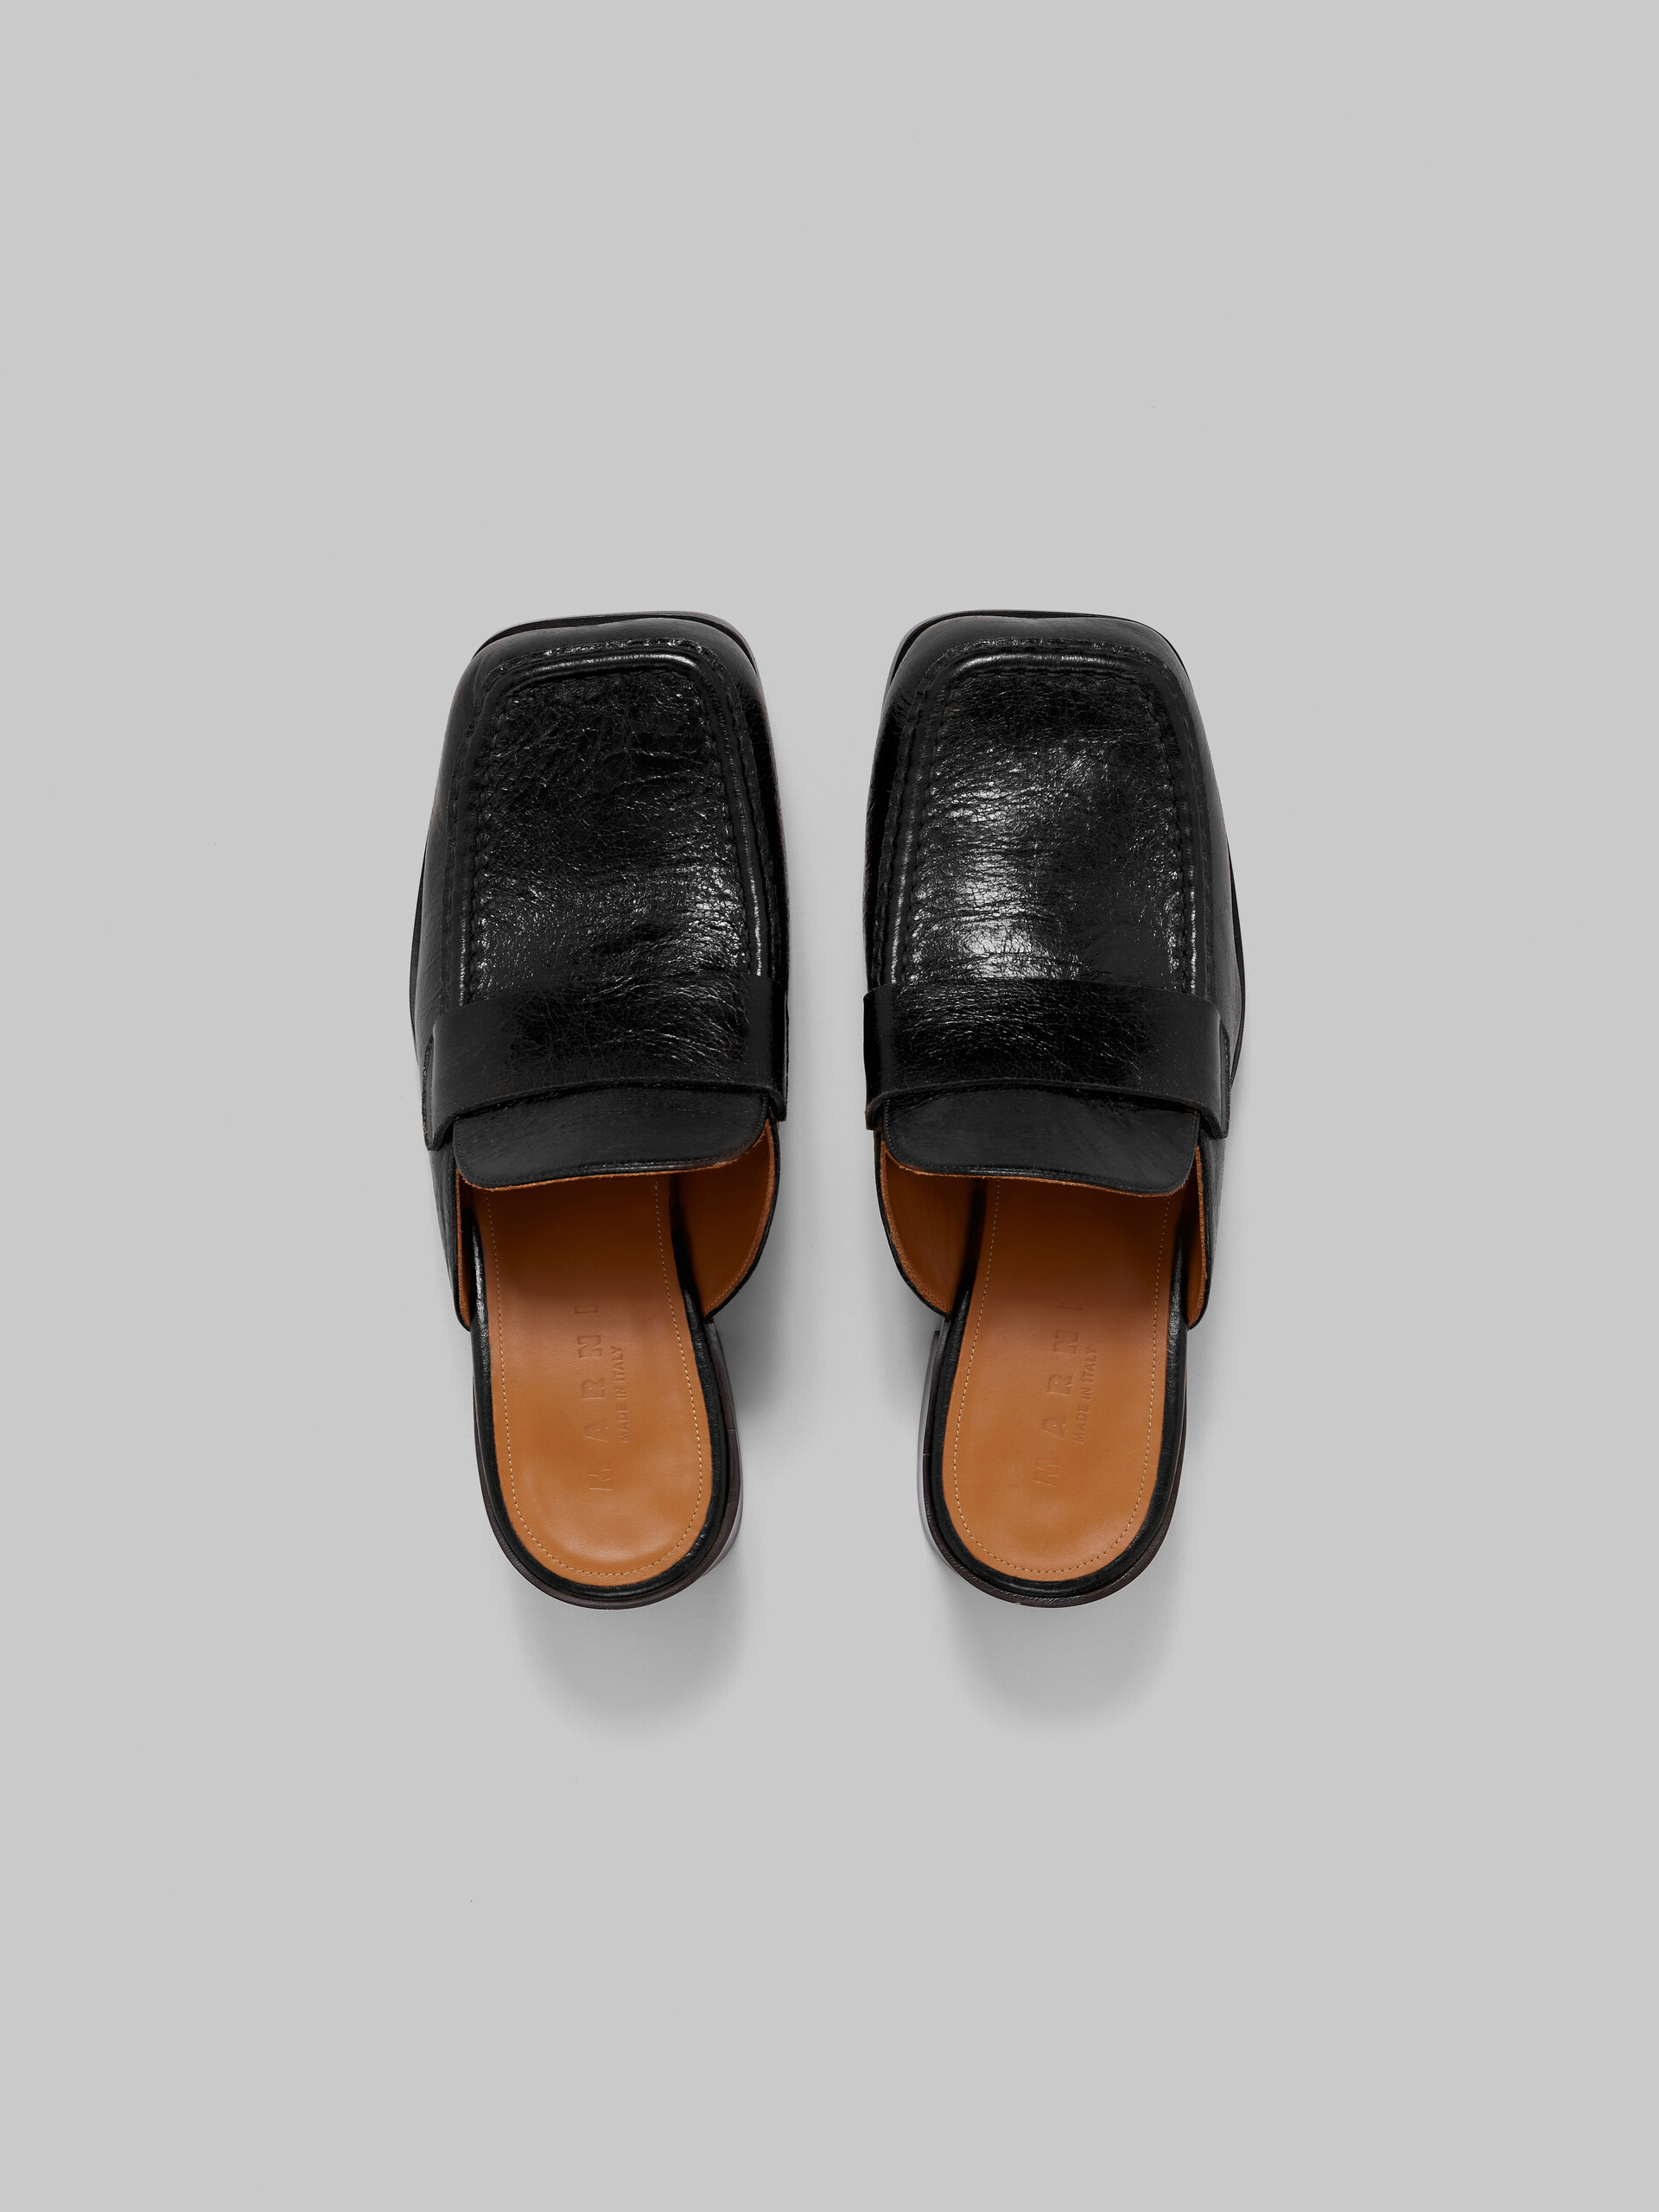 Black leather heeled mule - Clogs - Image 4